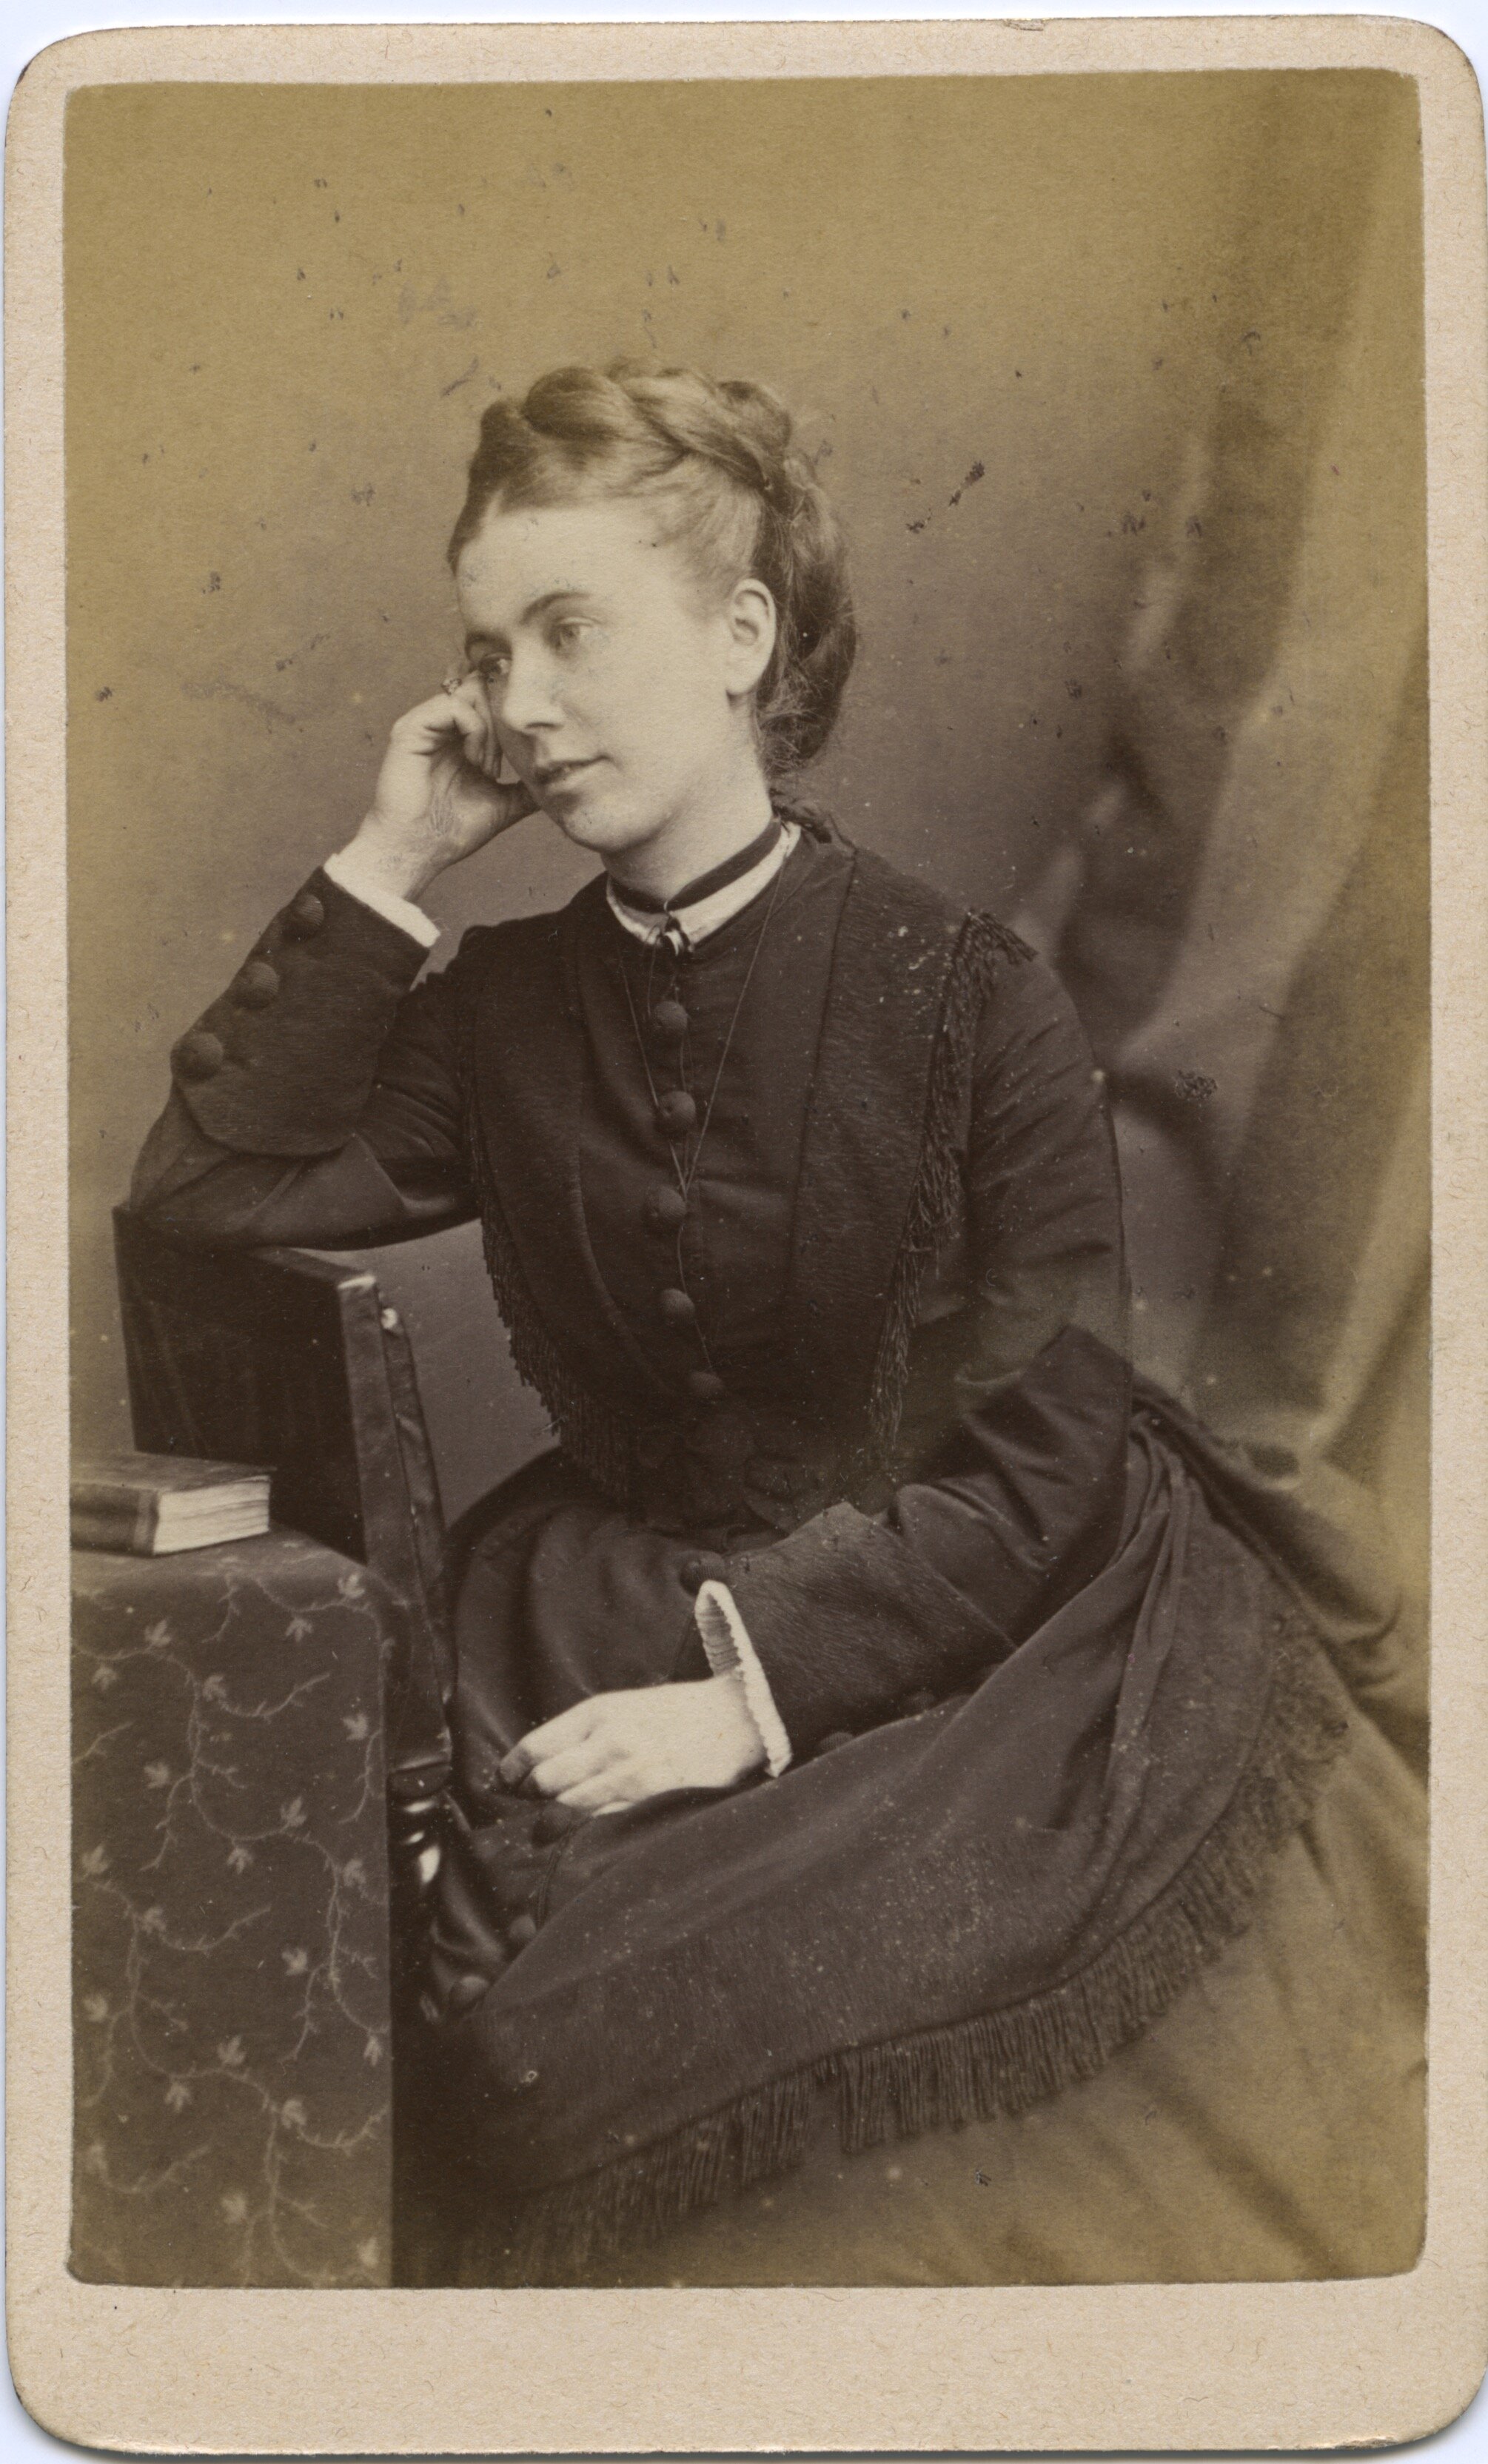 PORTRAIT OF A WOMAN CABINET CARD, N.D.